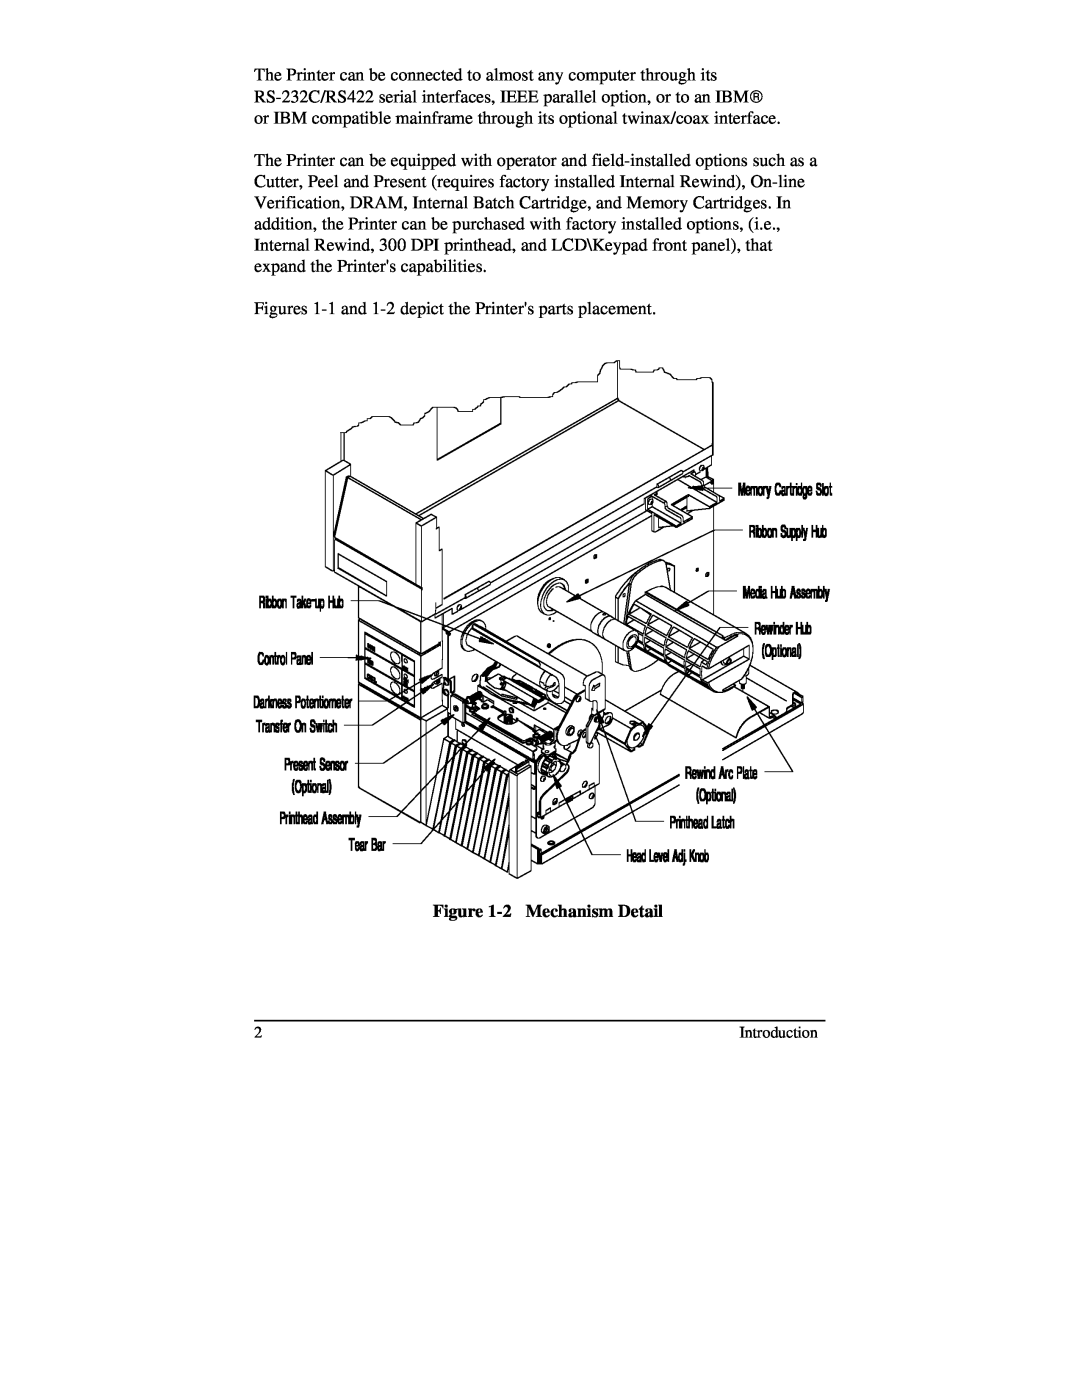 Brady 2024, 2034 manual 2 Mechanism Detail 